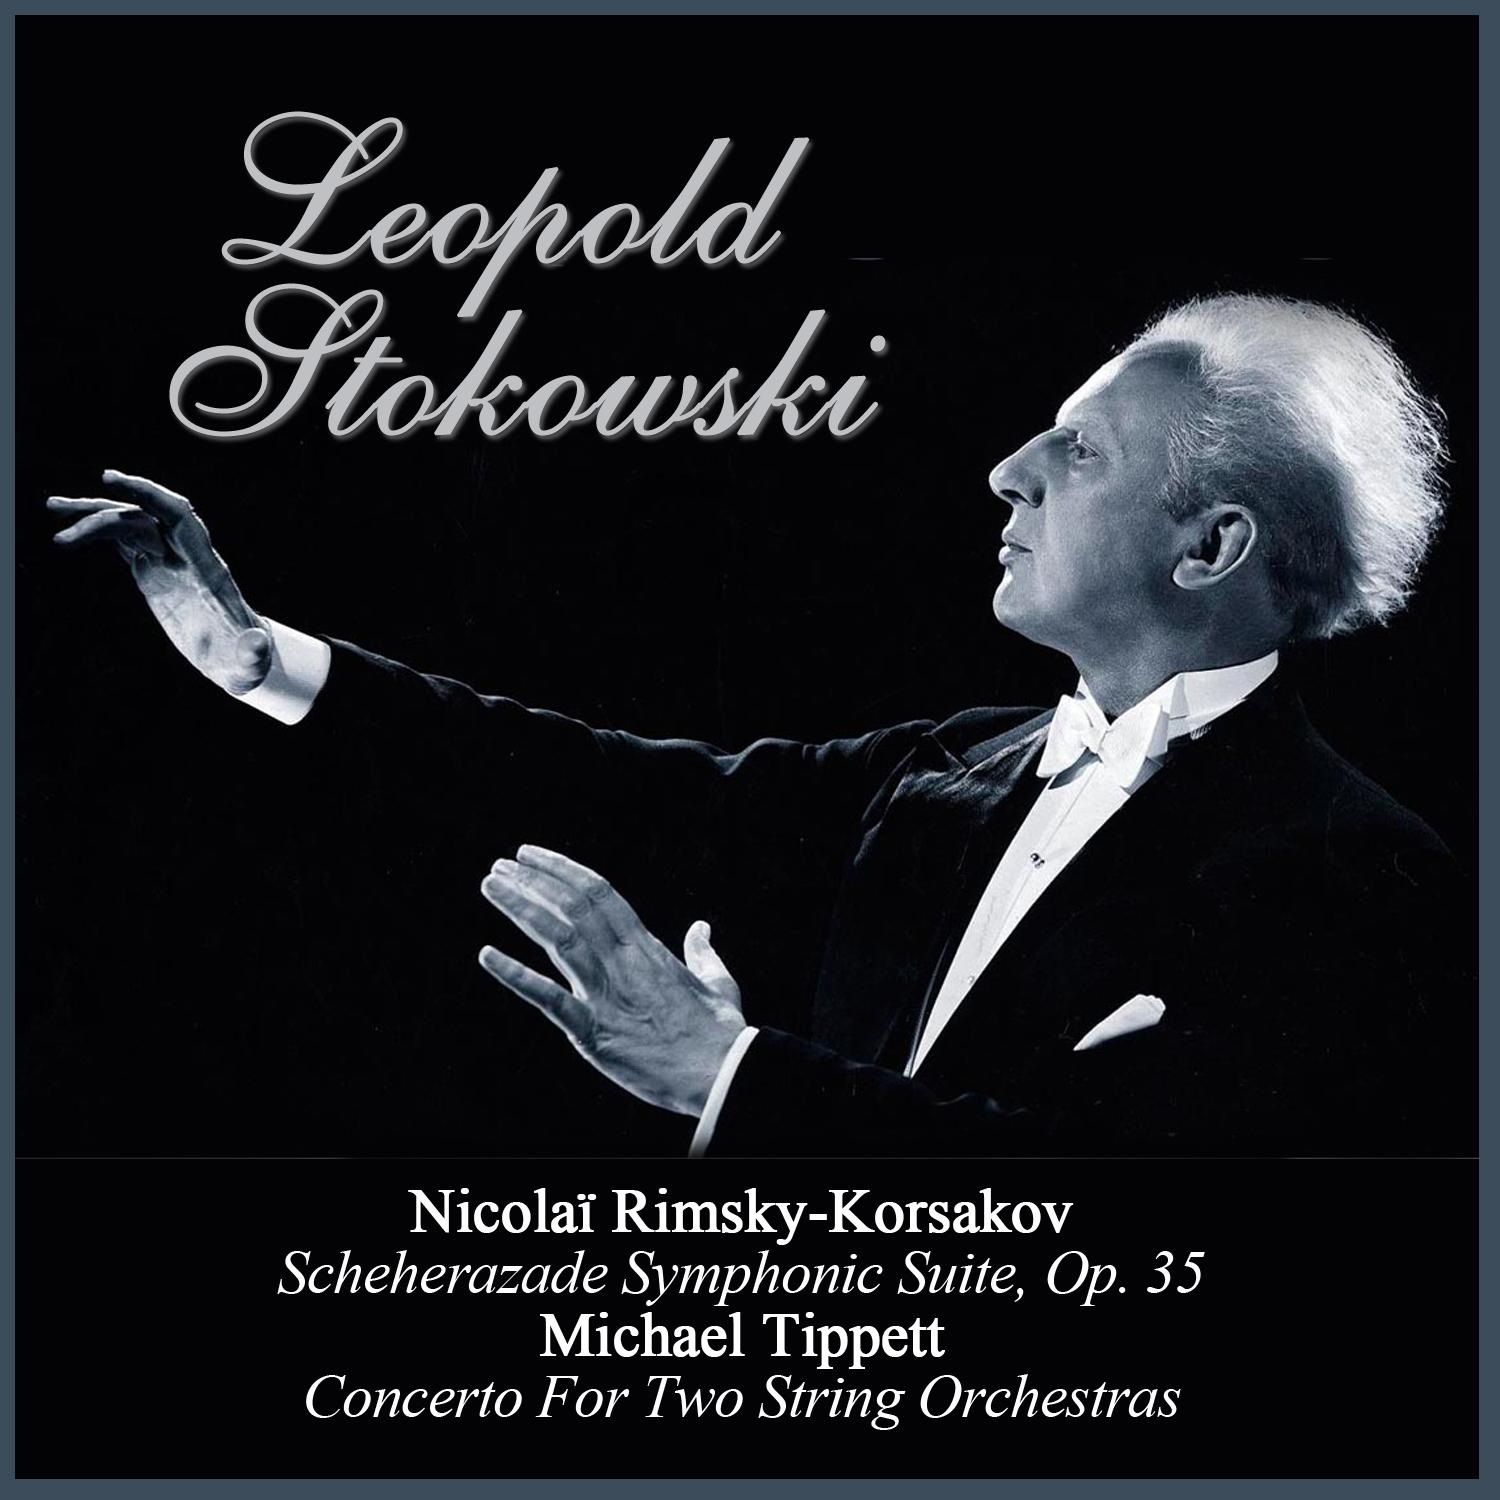 Nicola RimskyKorsakov: Scheherazade Symphonic Suite, Op. 35  Michael Tippett: Concerto For Two String Orchestras